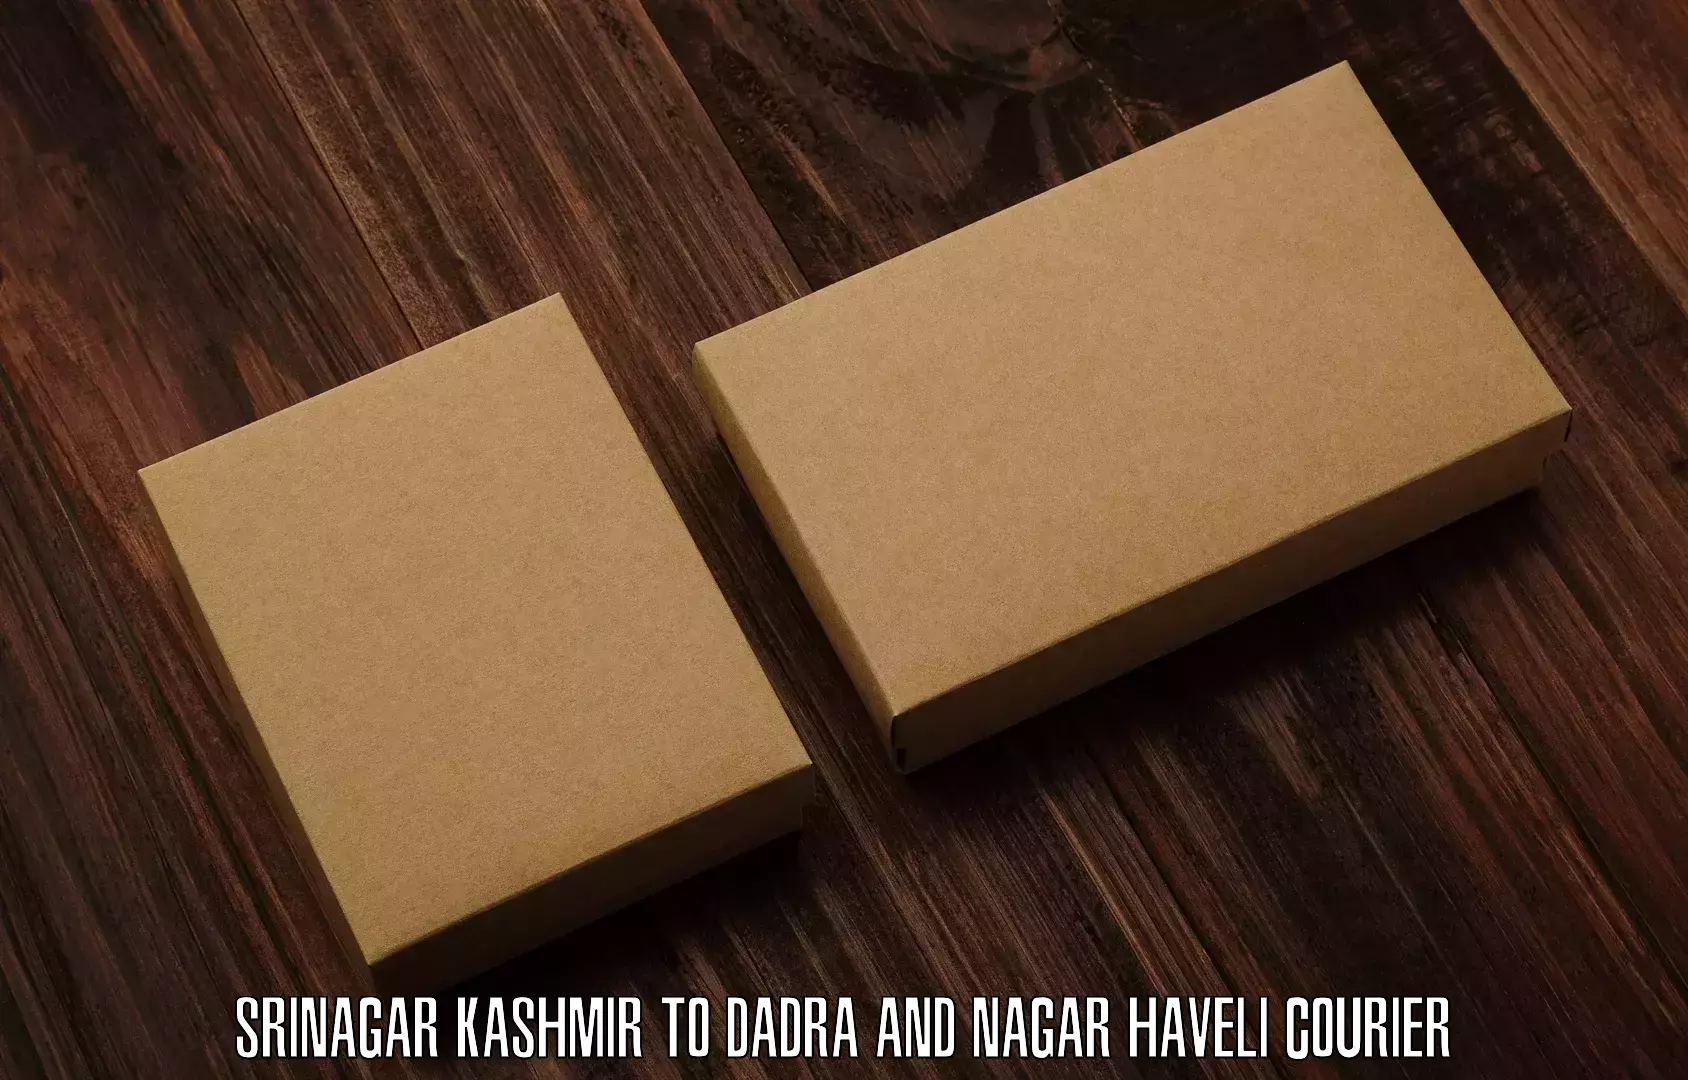 Customer-focused courier Srinagar Kashmir to Silvassa